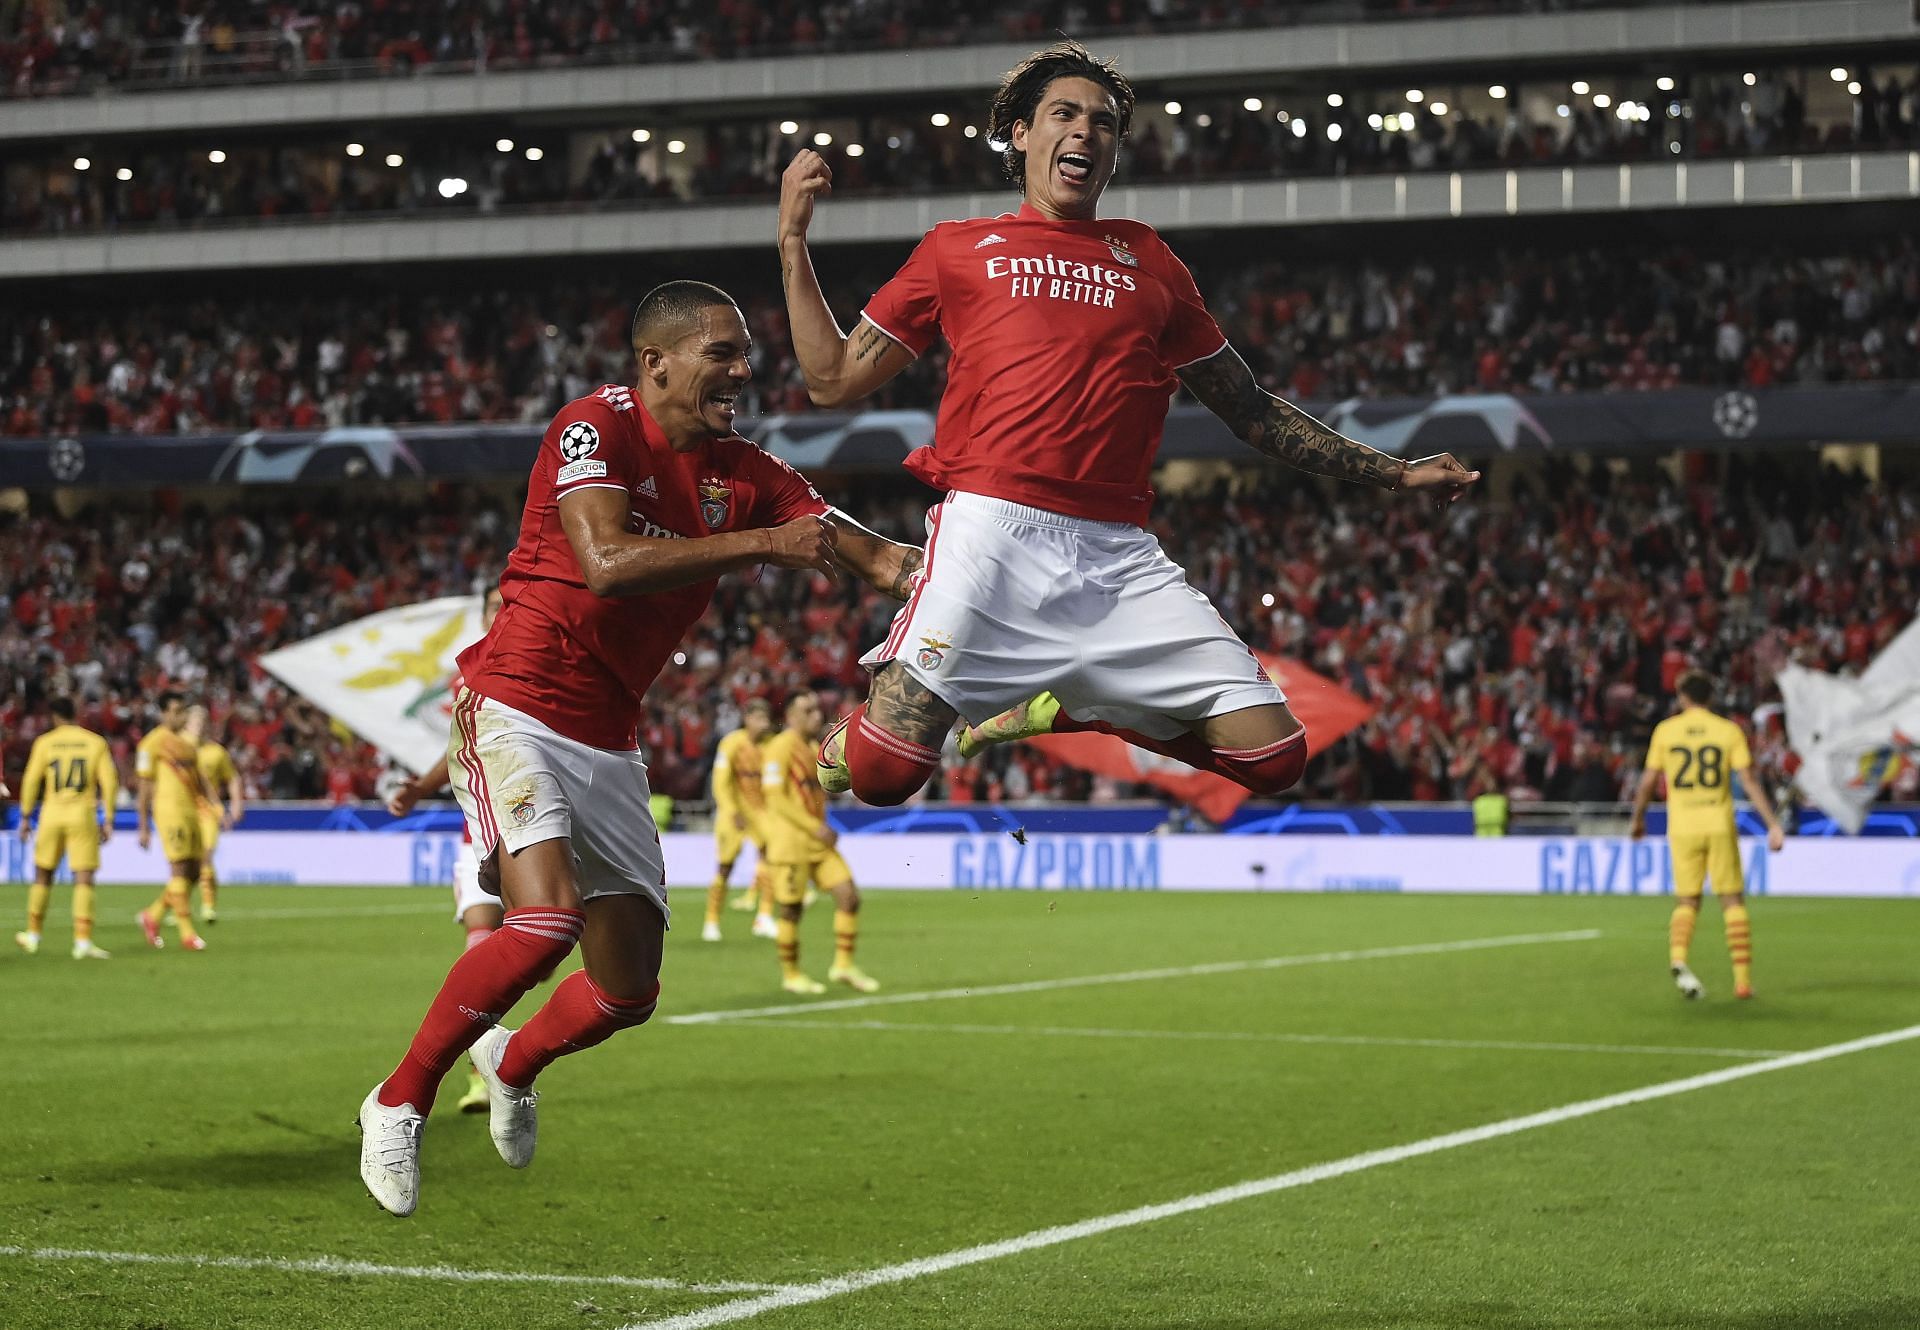 Darwin Nunez has been exceptional for Benfica